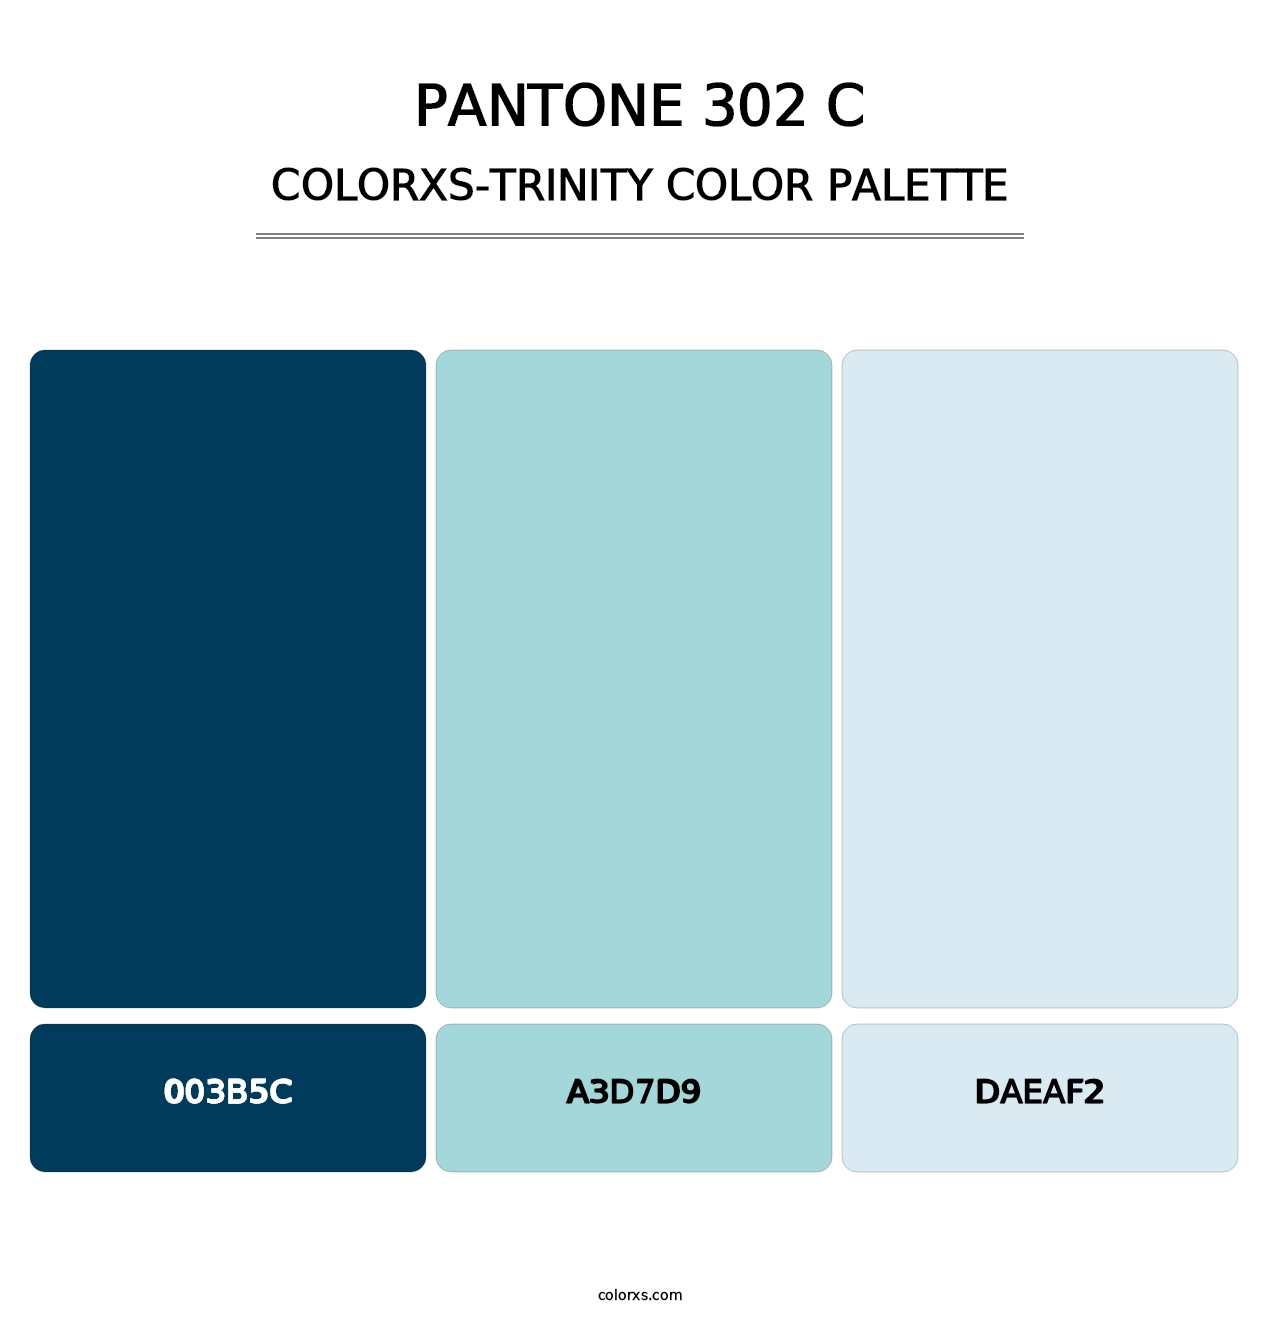 PANTONE 302 C - Colorxs Trinity Palette